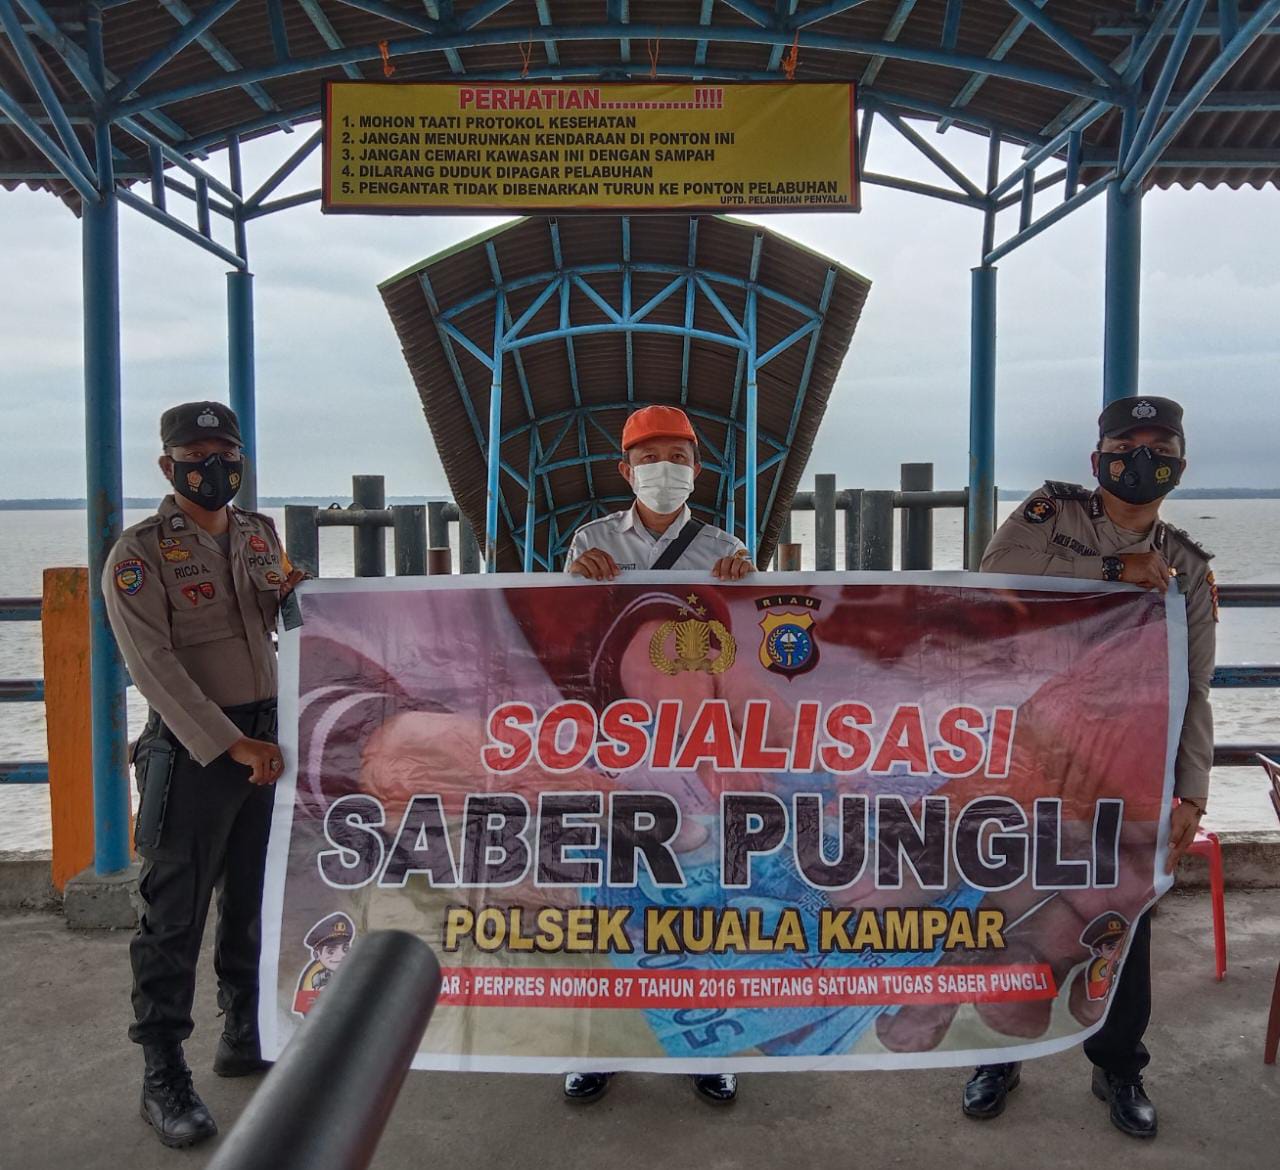 Polsek Kuala Kampar Sosialisasi Perpres Nomor 87 Tahun 2016 Tentang Satgas Saber Pungli